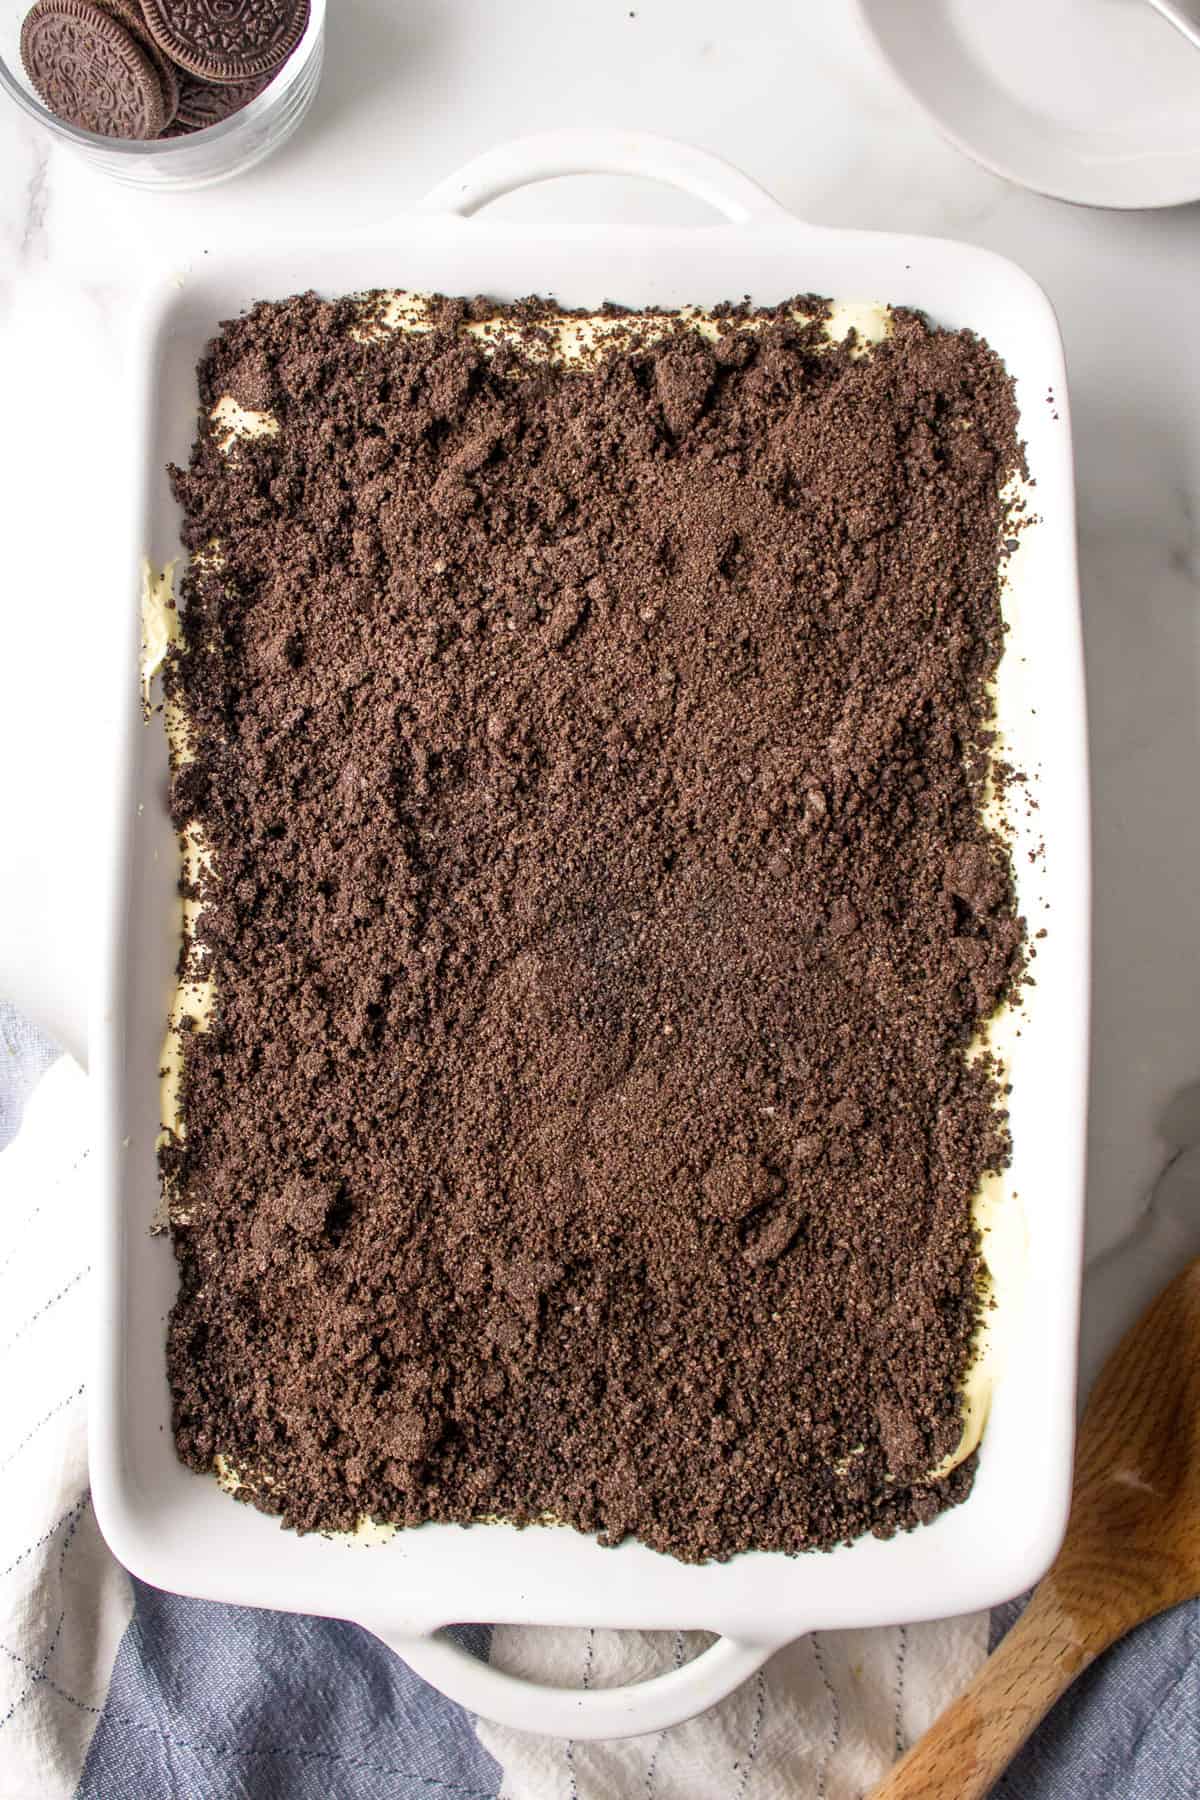 top down view of dirt cake